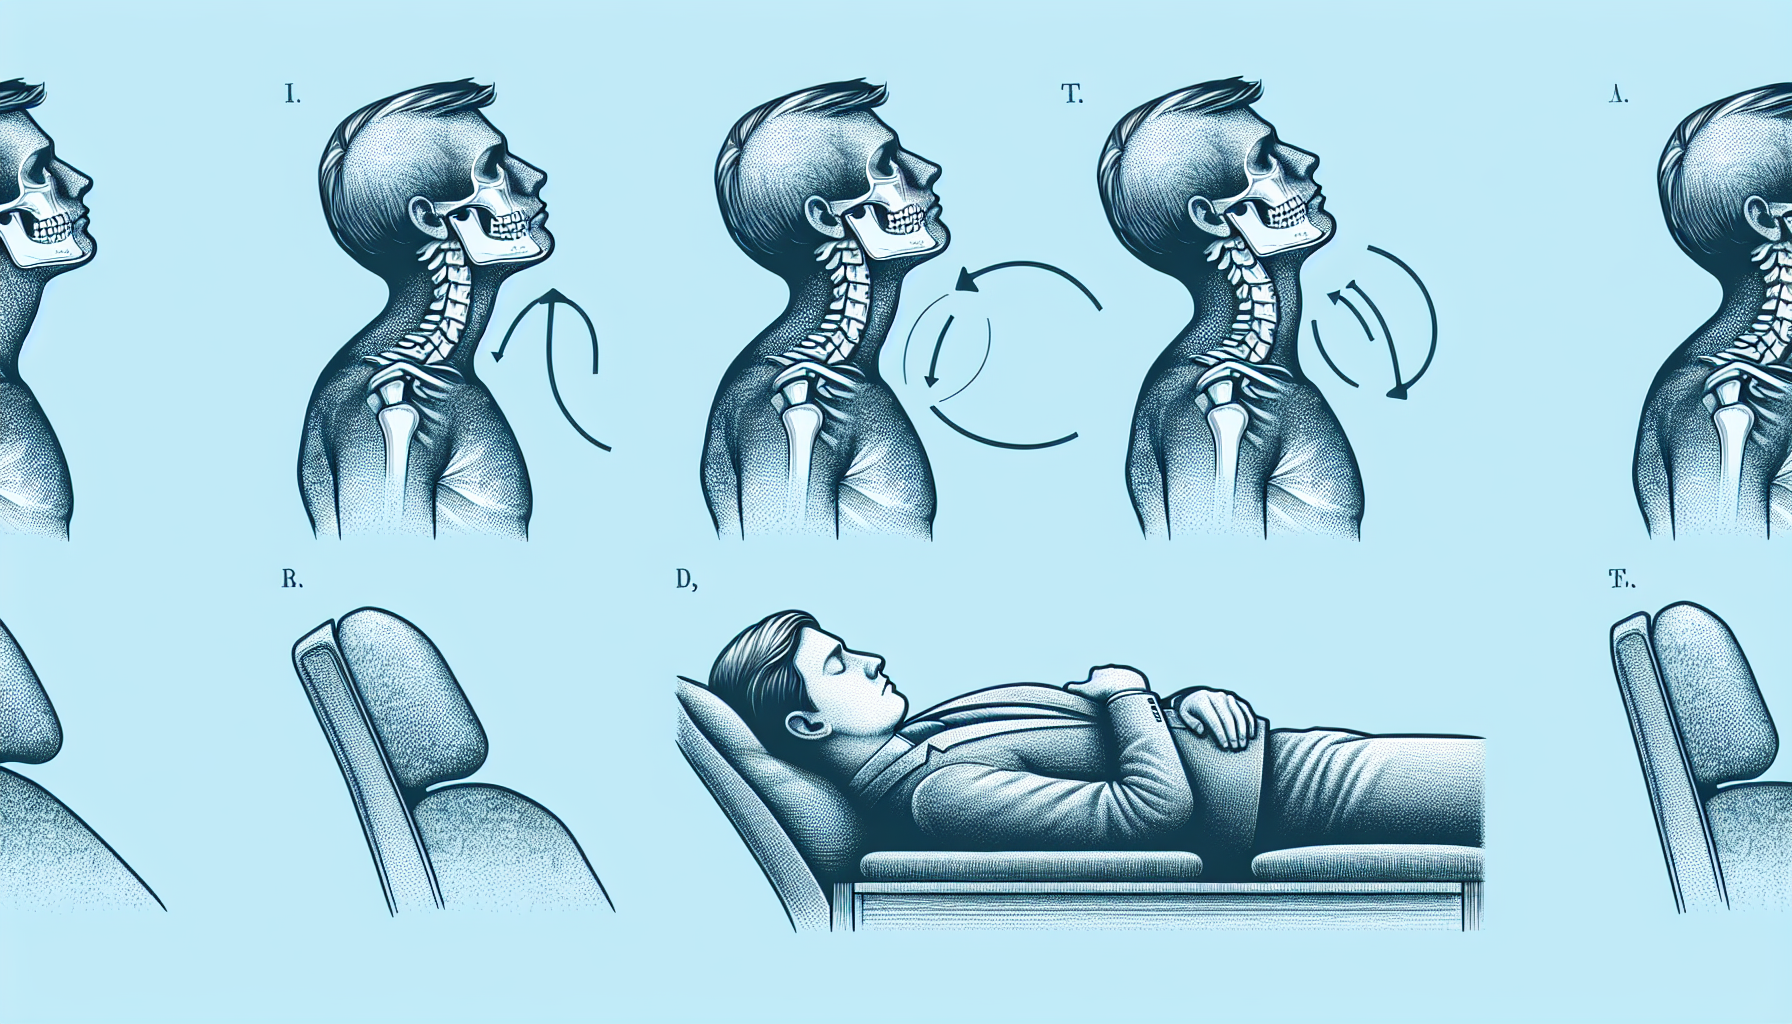 Illustration of posture correction strategies for occipital neuralgia prevention